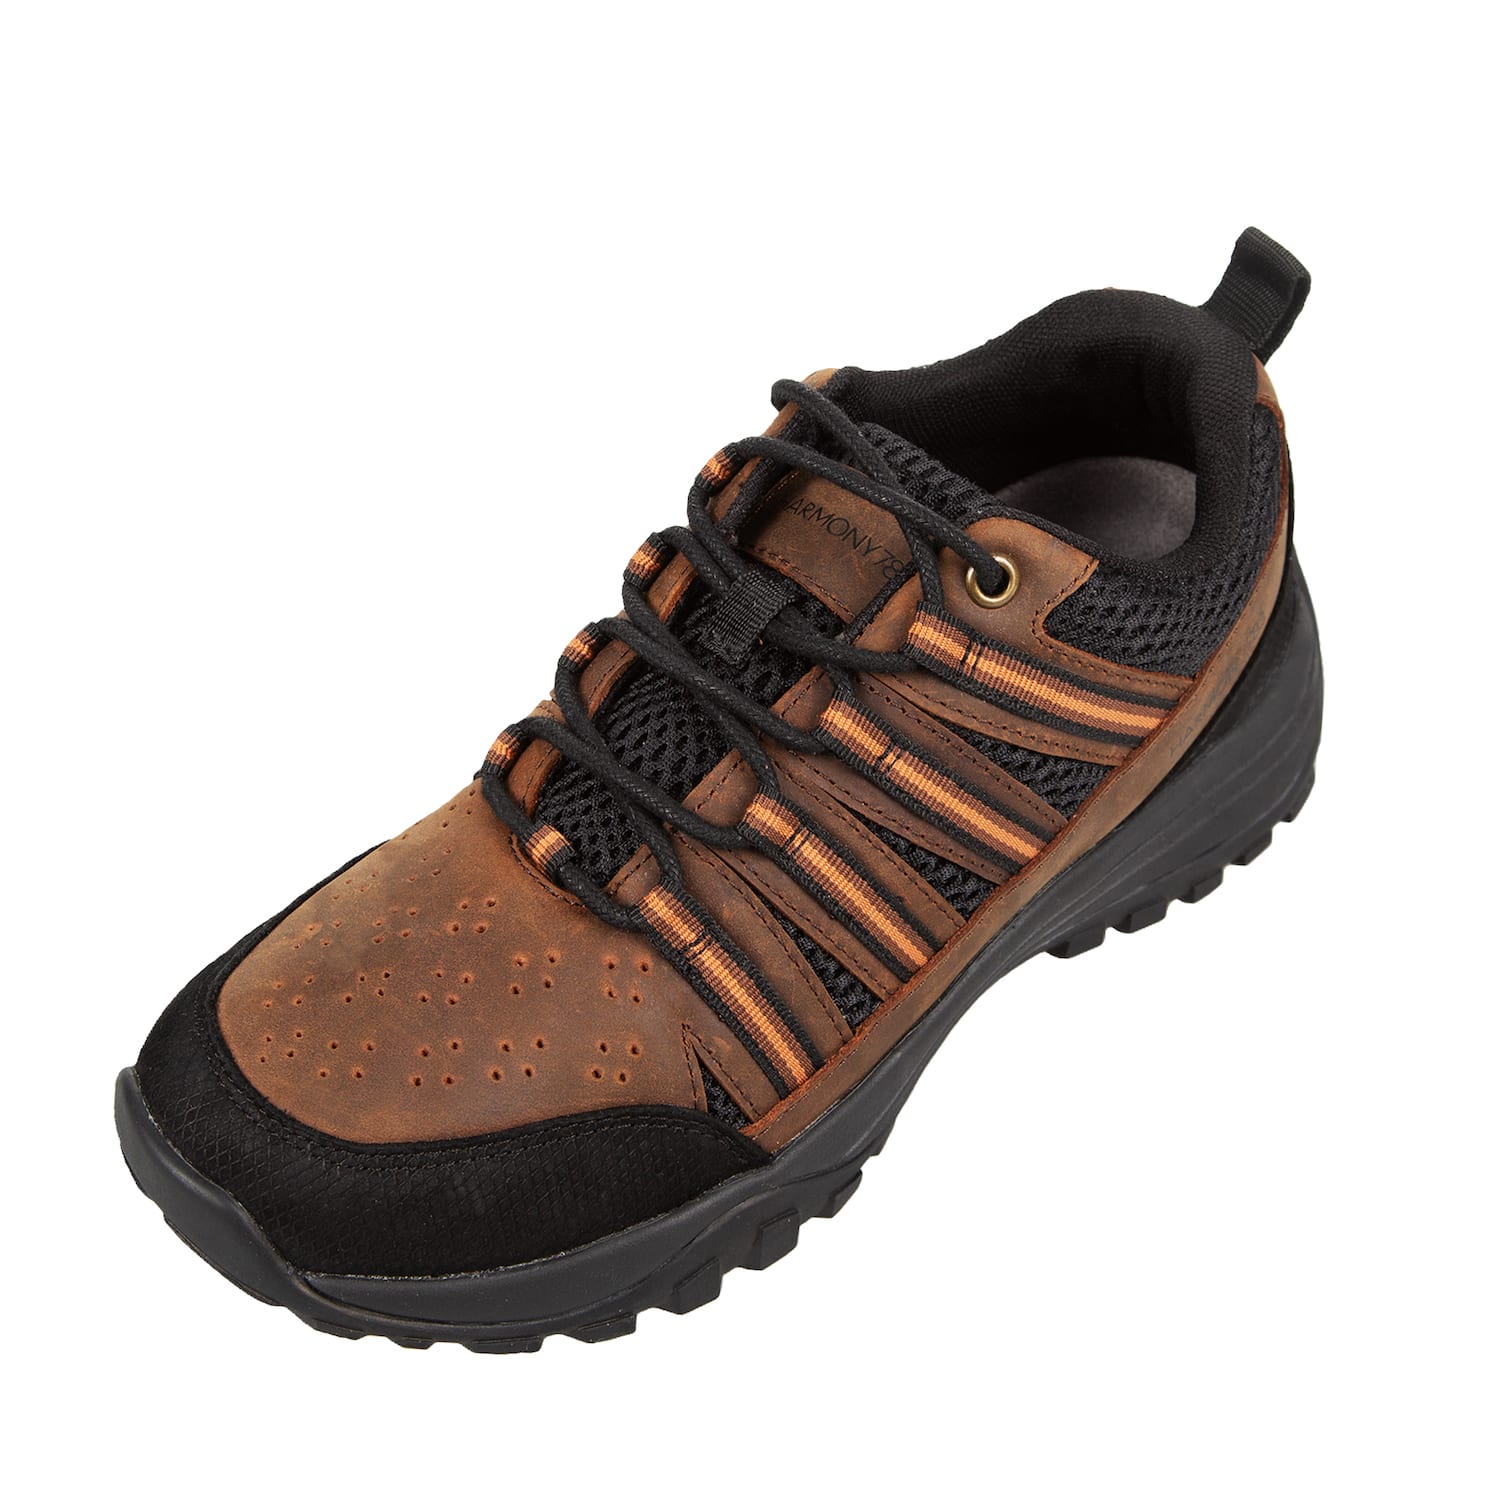 Trail Shoe • Jesse Brown Leather & Black Mesh